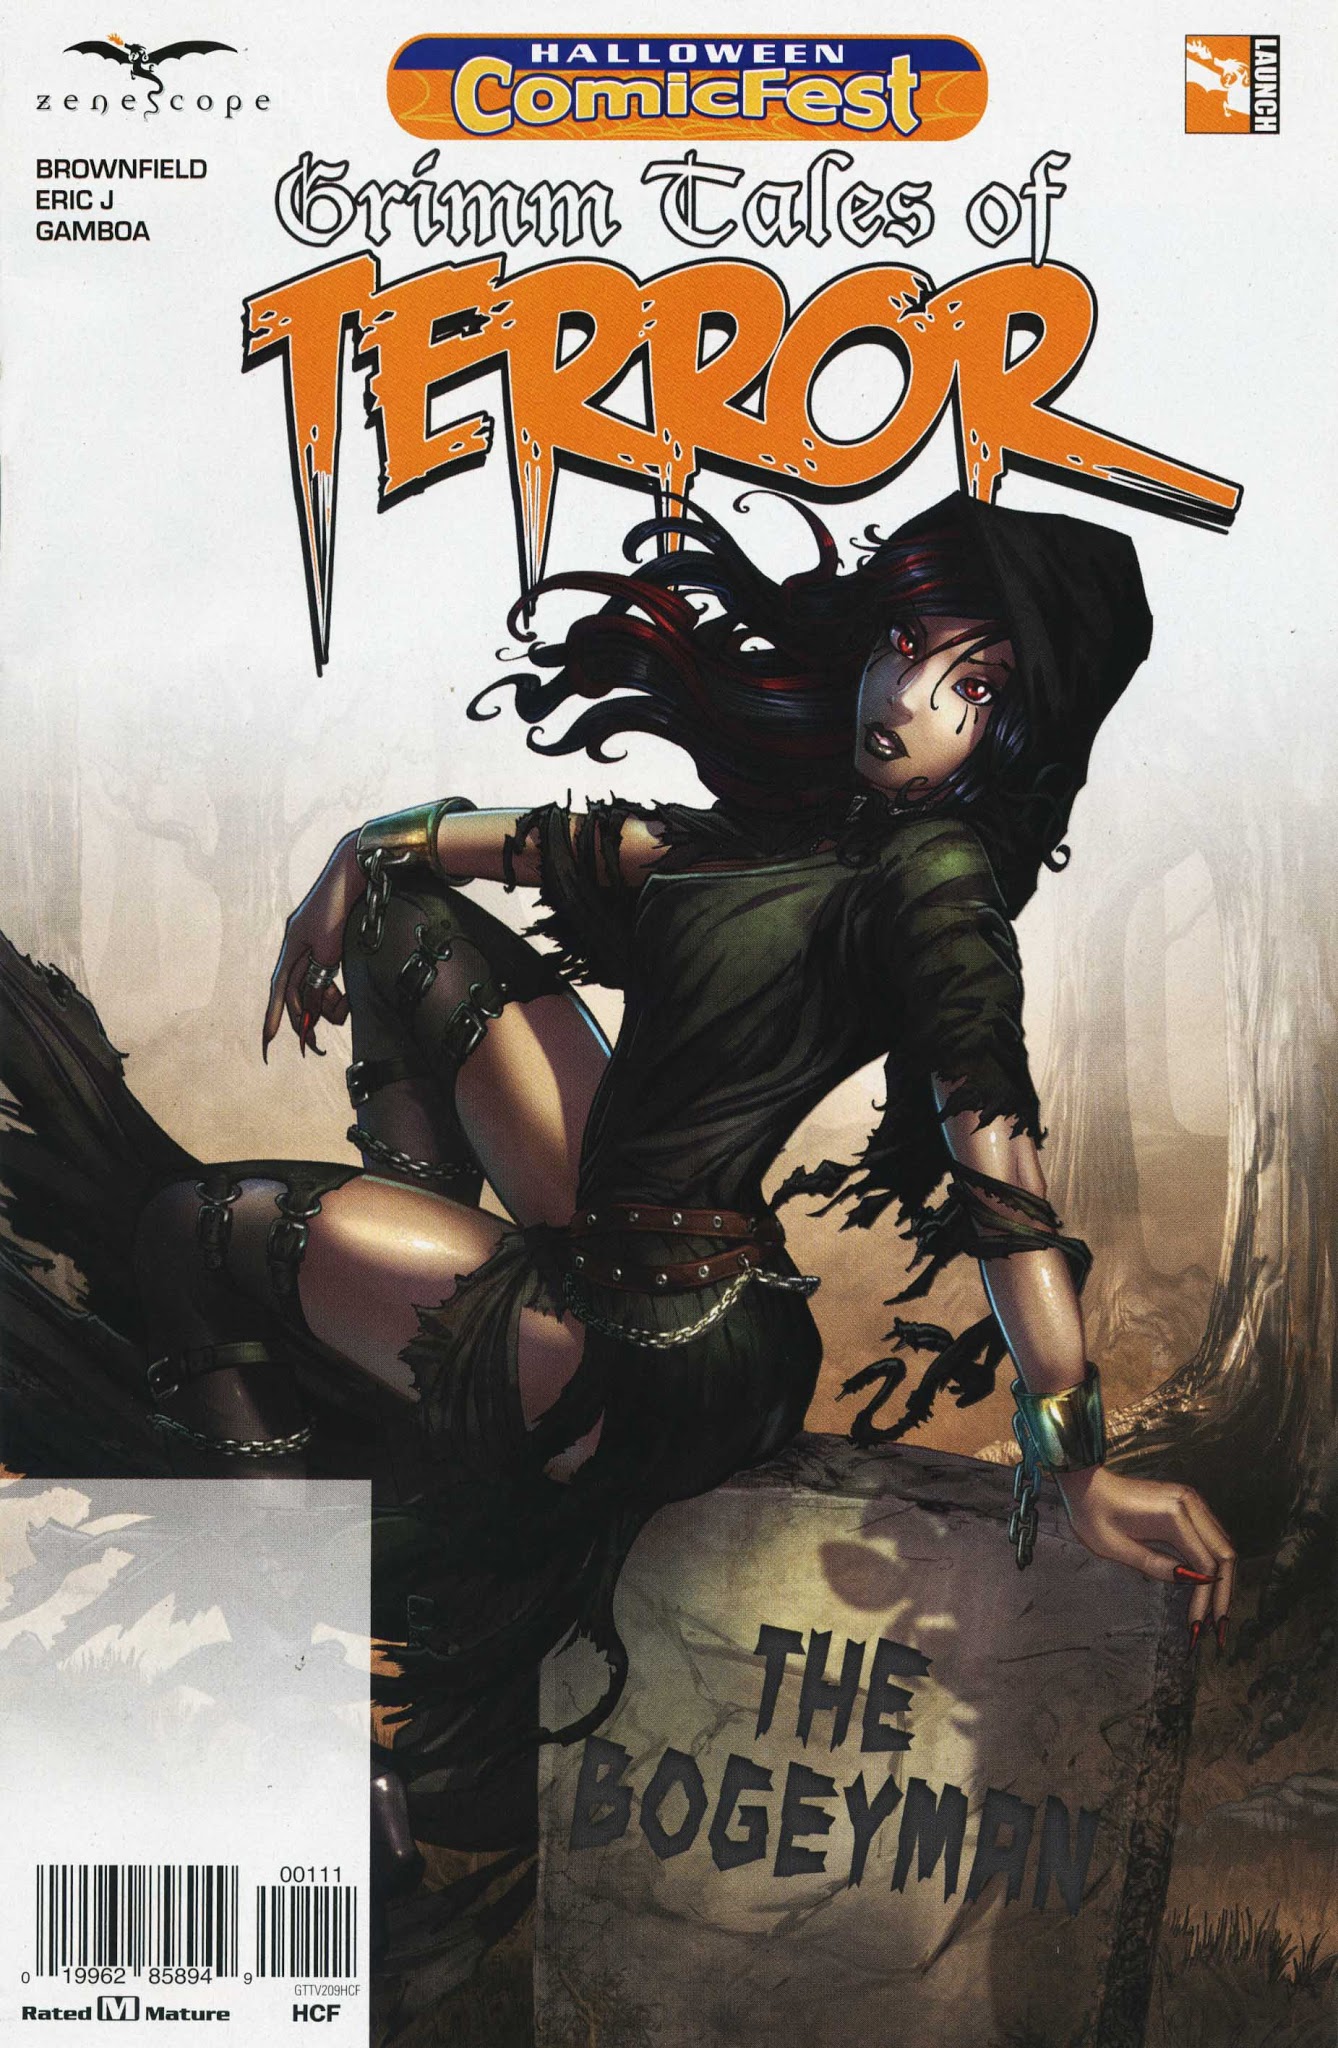 Read online Halloween Comicfest 2017: Grimm Tales of Terror comic -  Issue # Full - 1